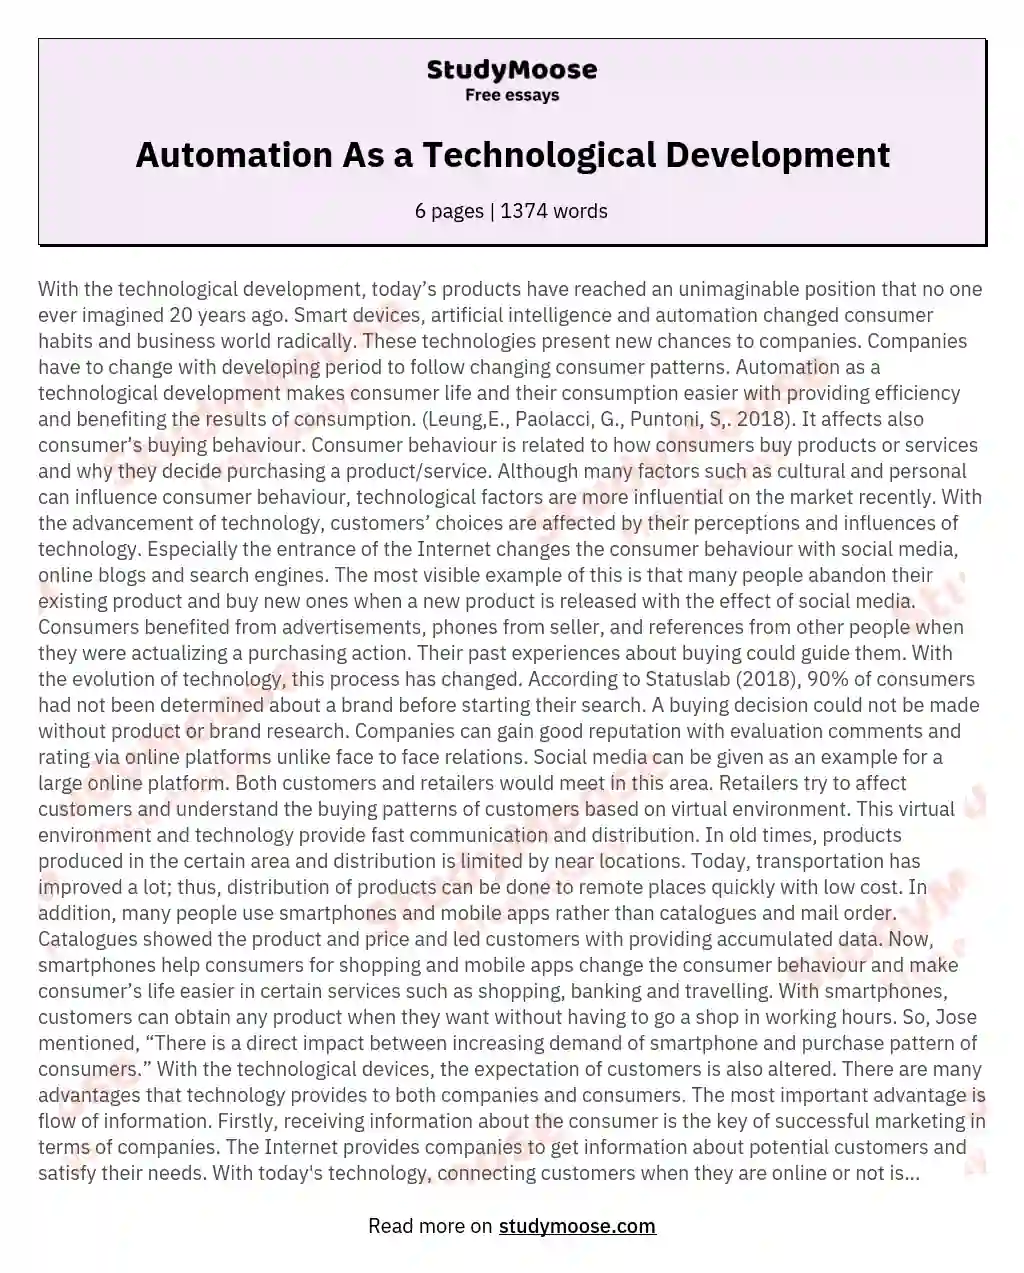 Automation As a Technological Development essay